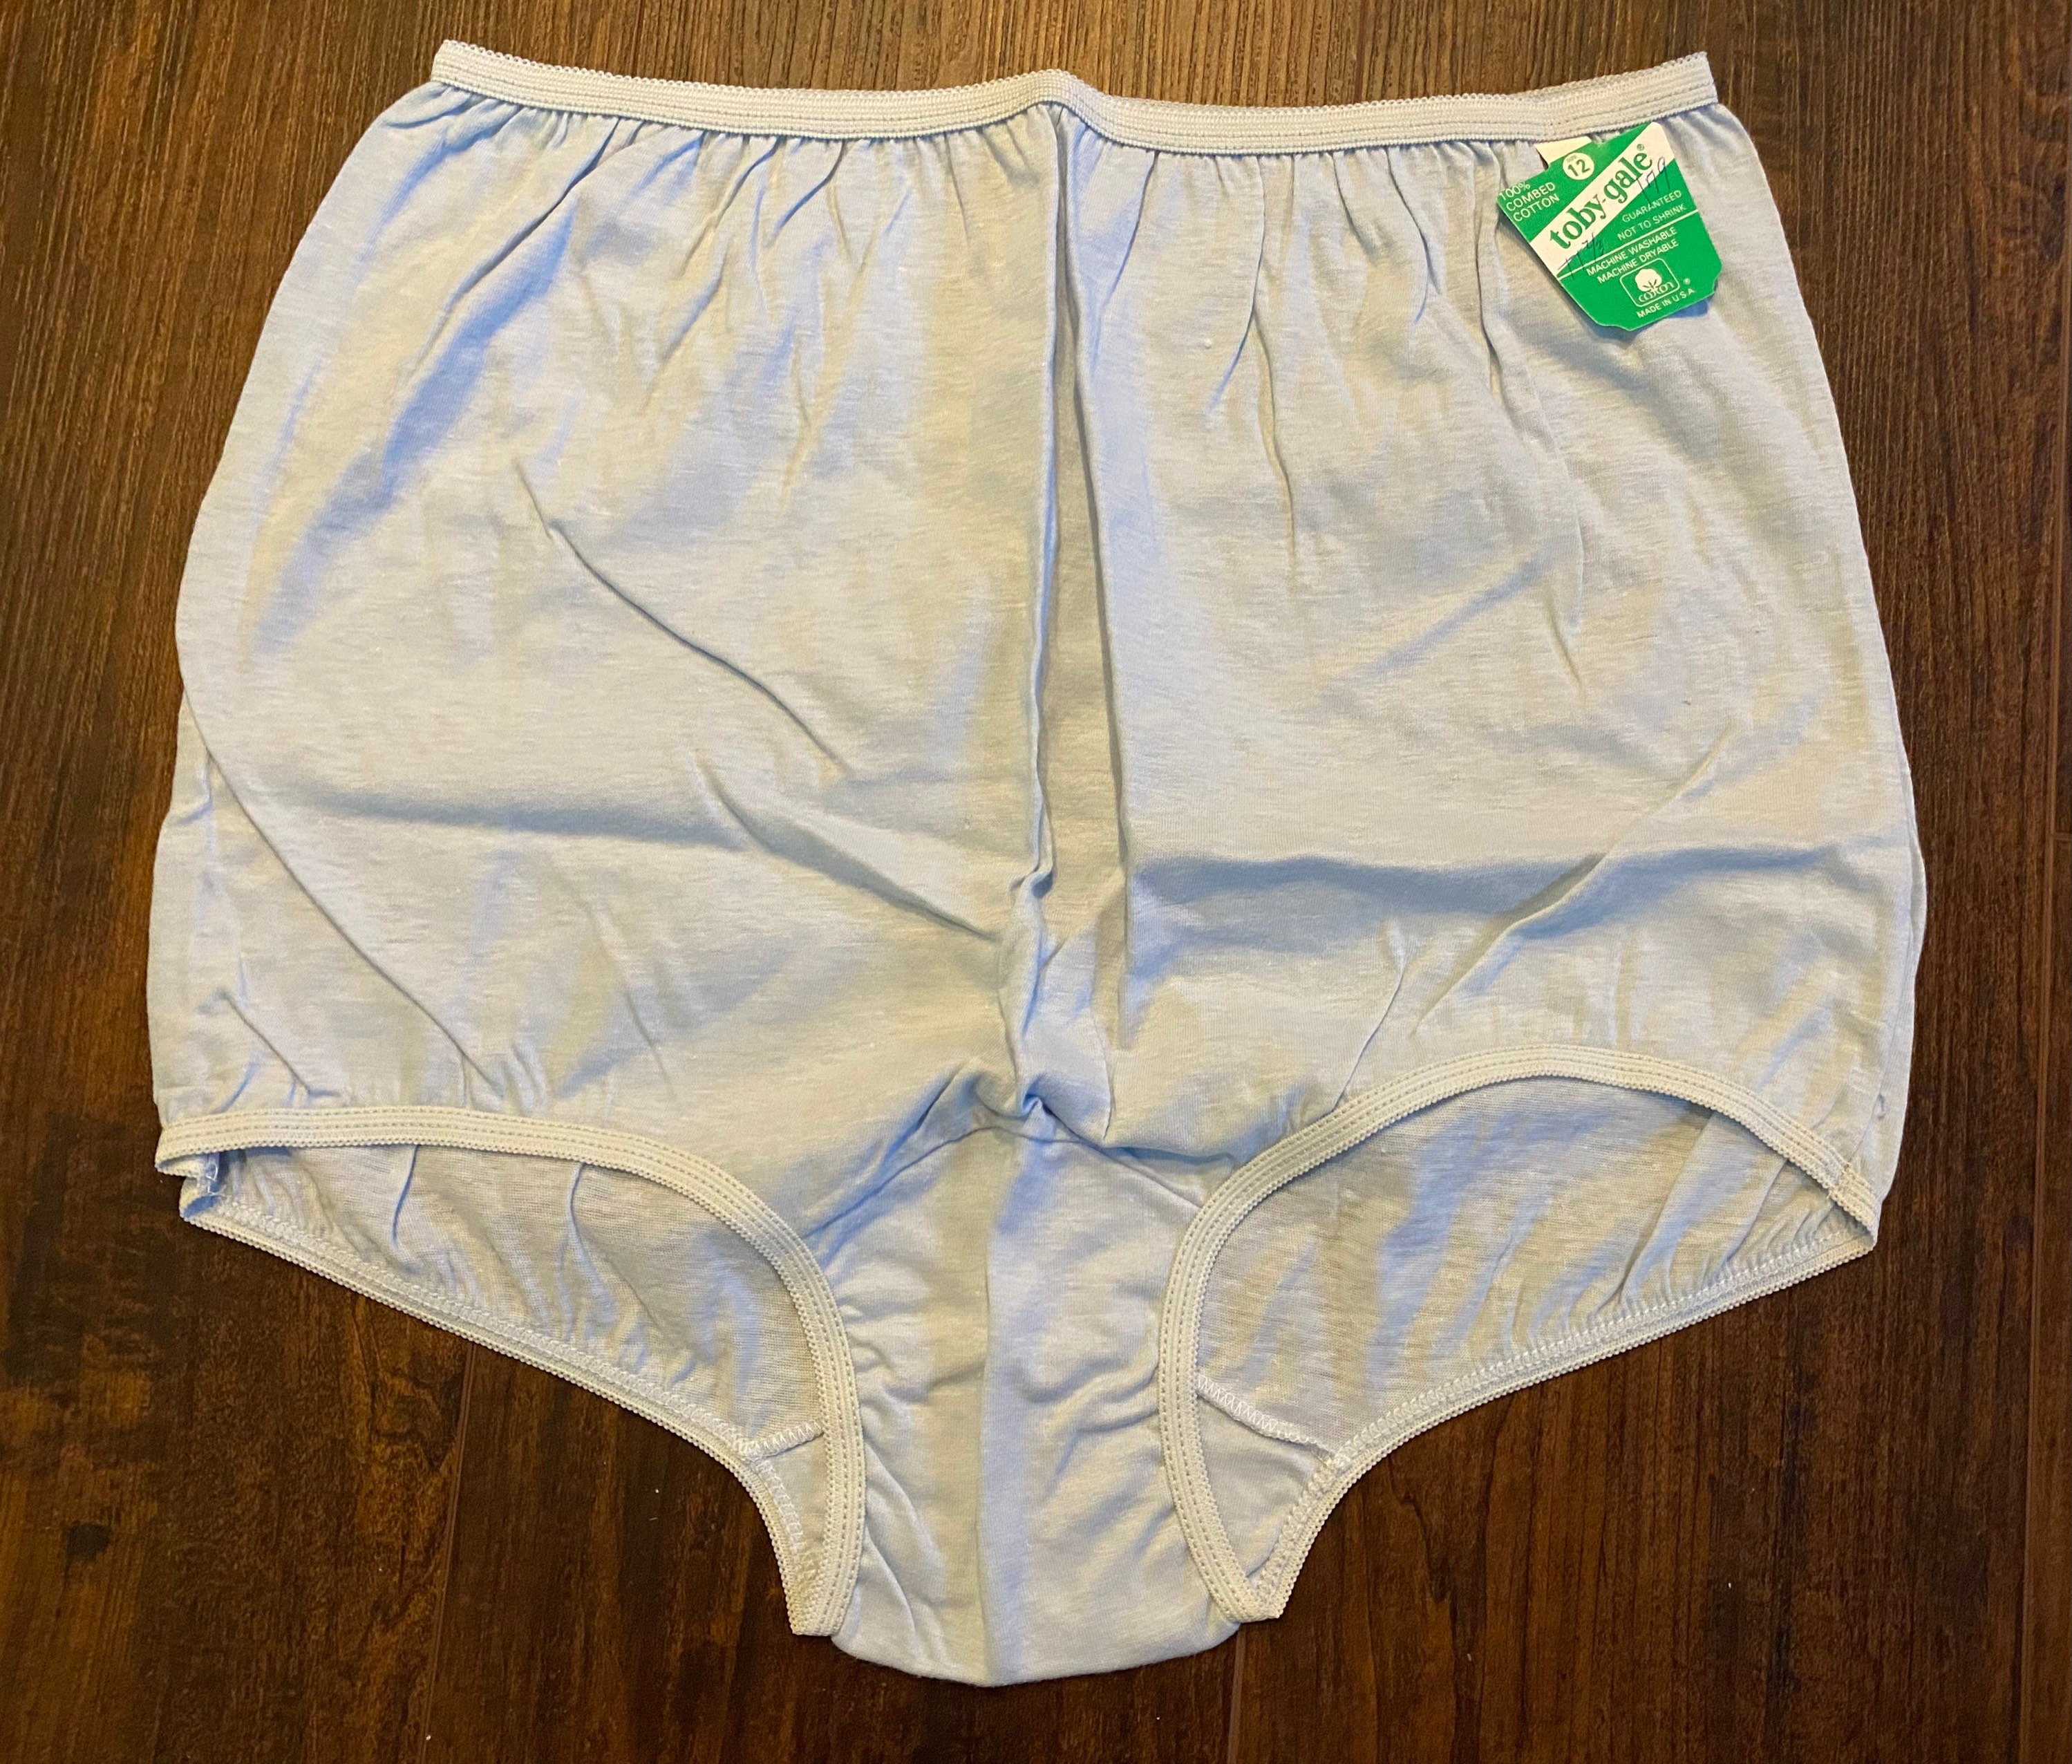 Vtg White Nylon Granny Panties 9 XL 3 Pr Underwear Si… - Gem